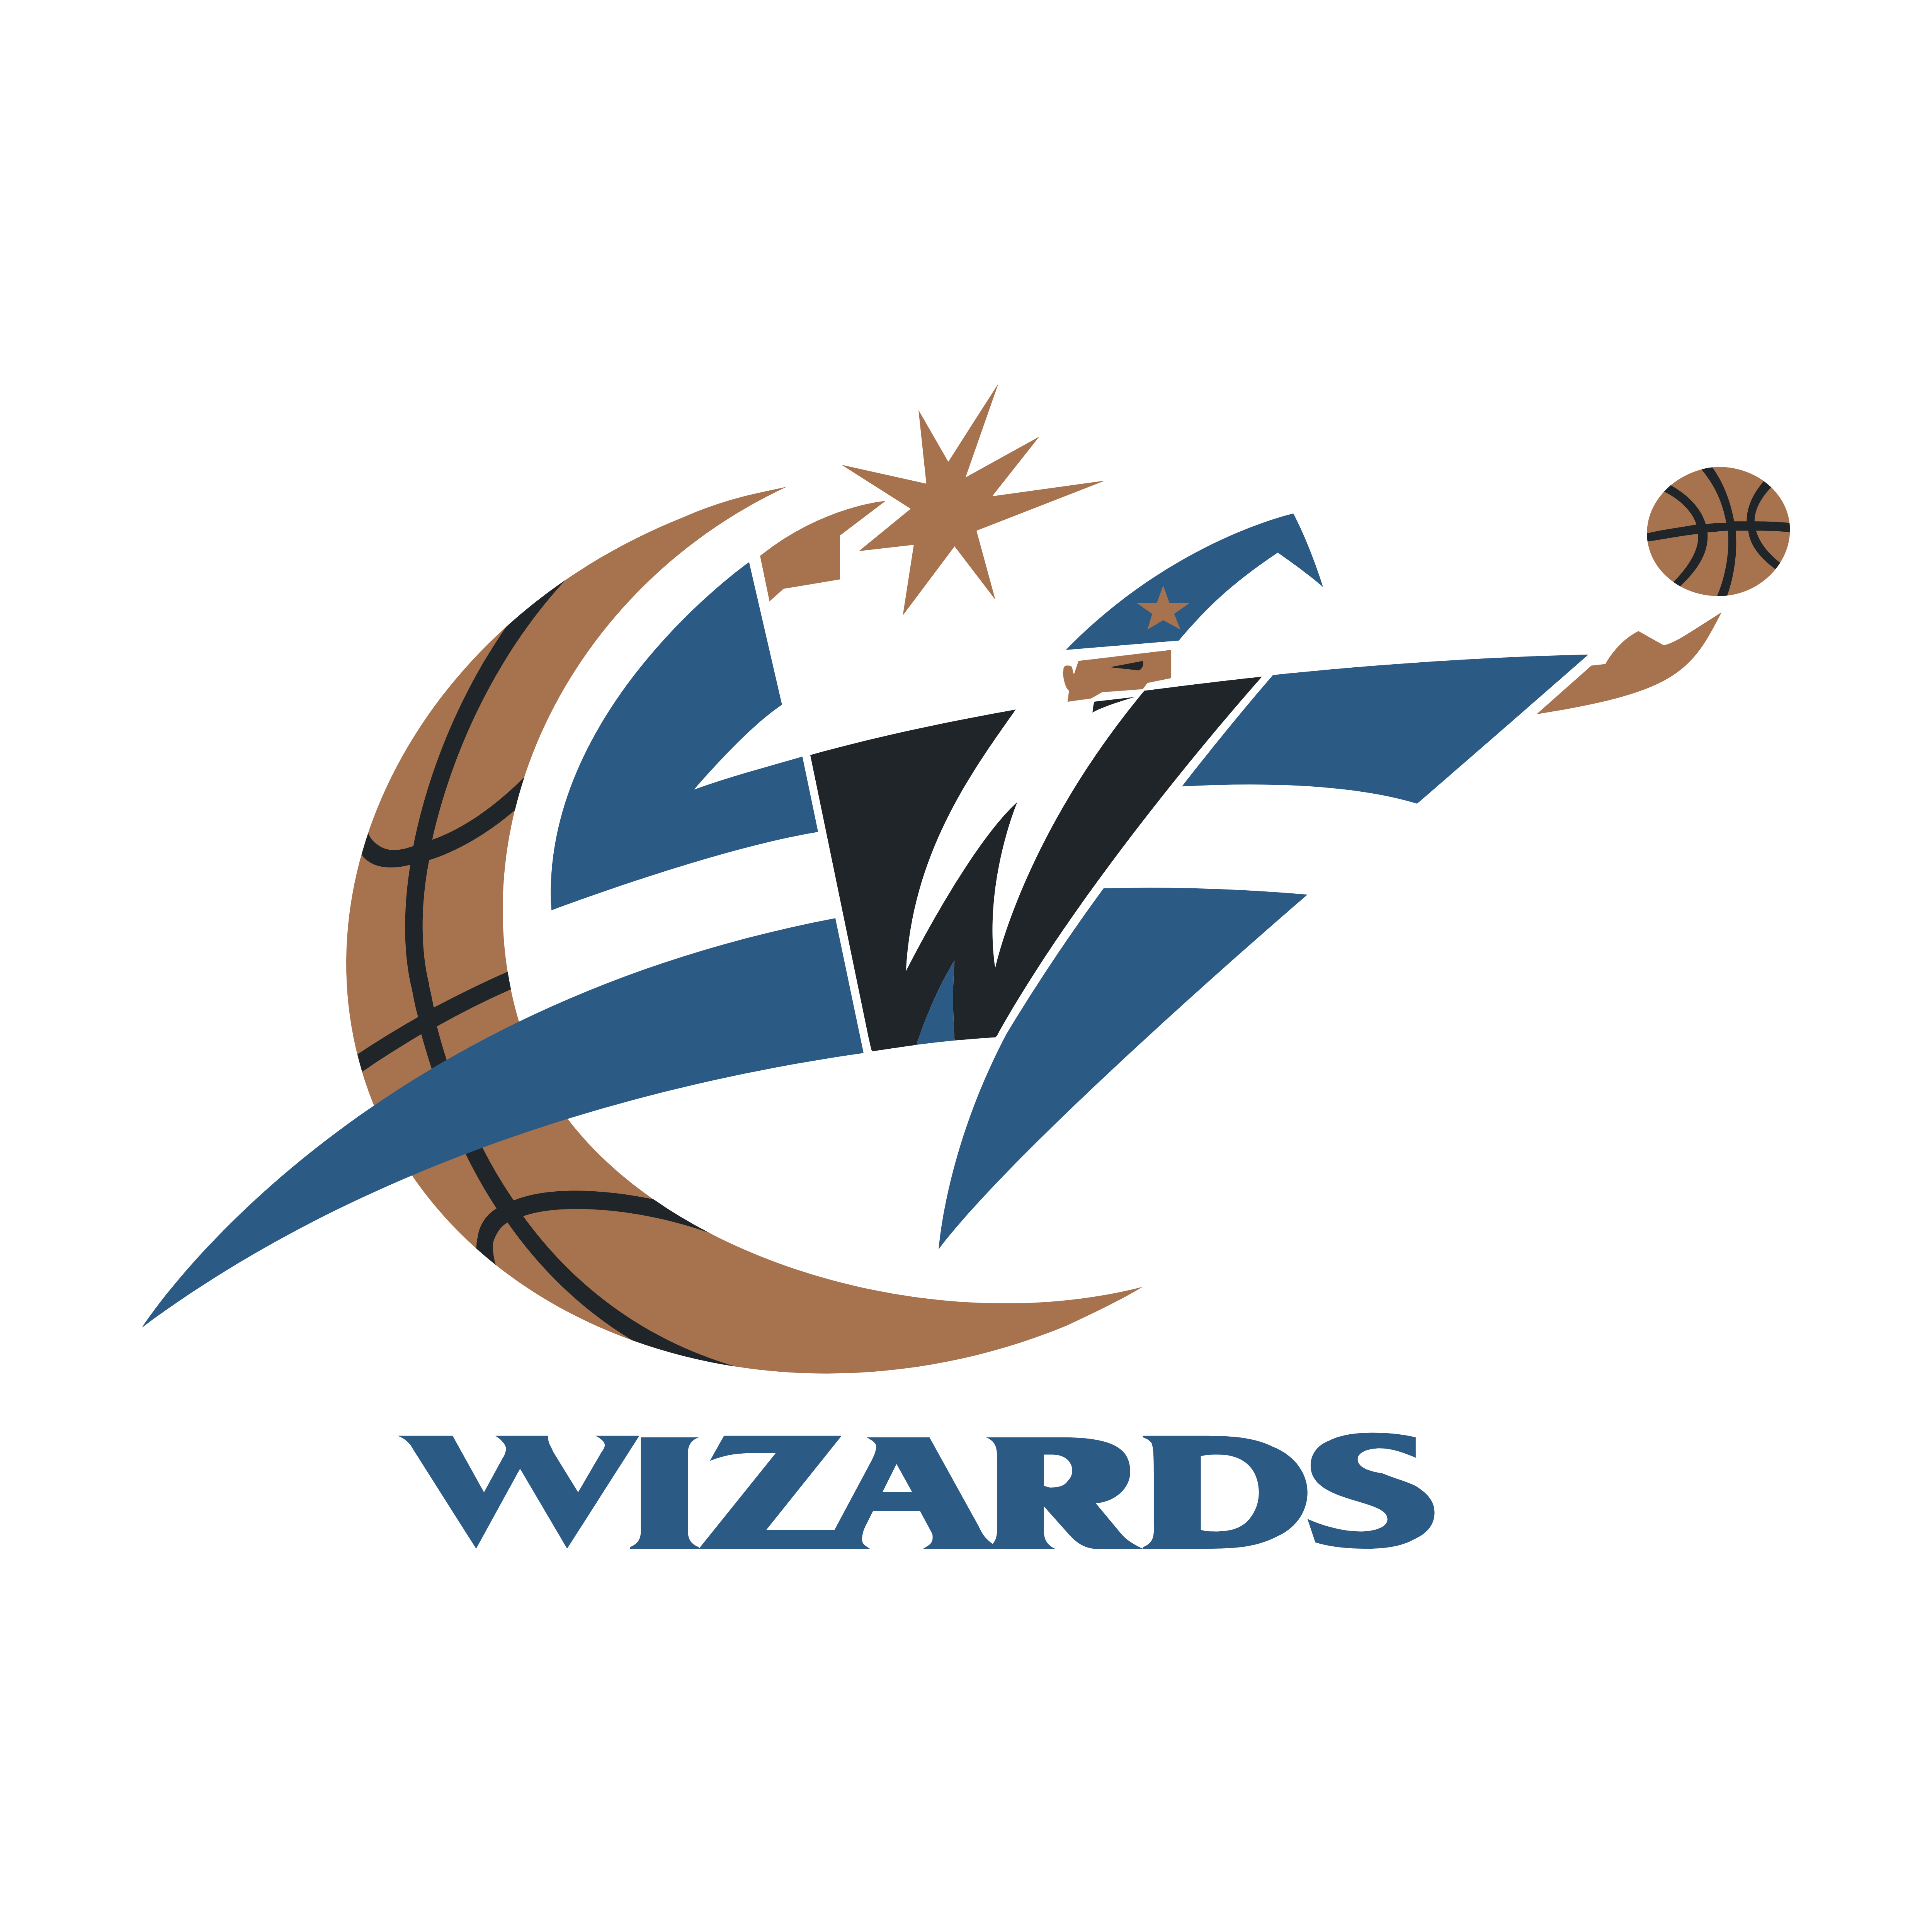 Washington Wizards.